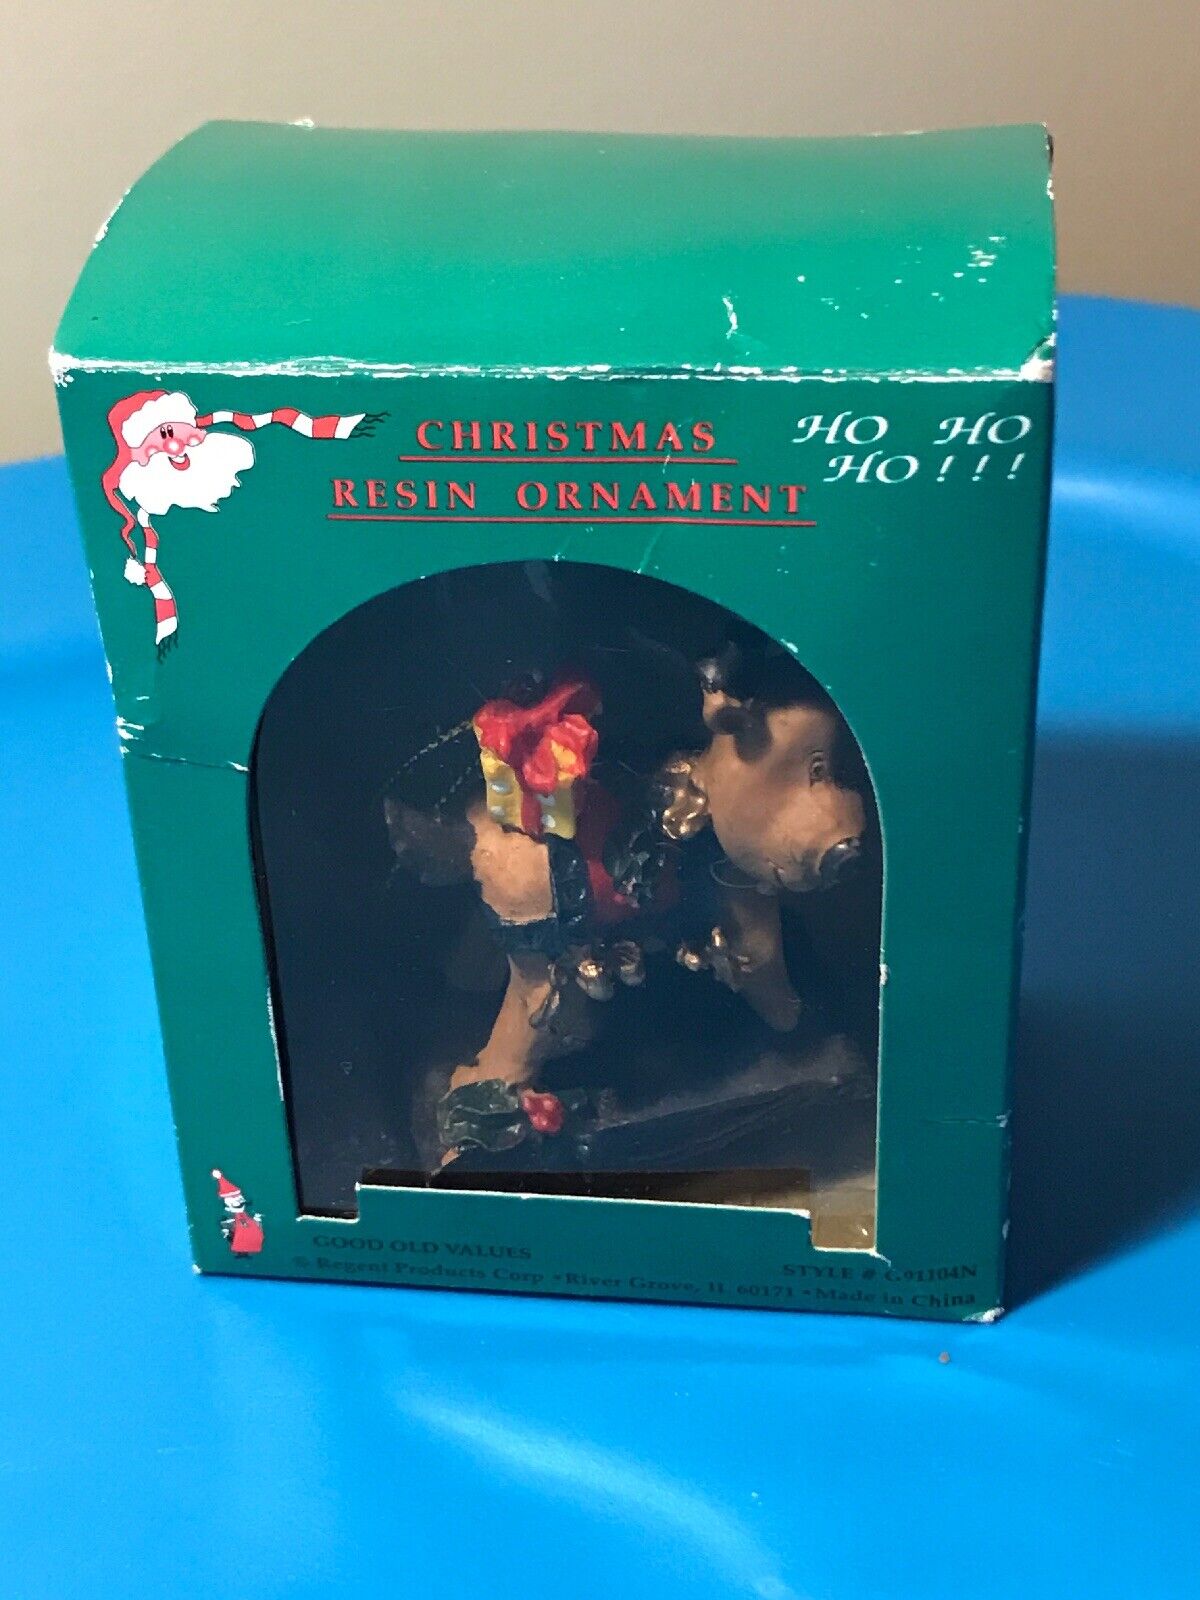 Reindeer Good Old Values Resin Christmas Ornament Style G91104N